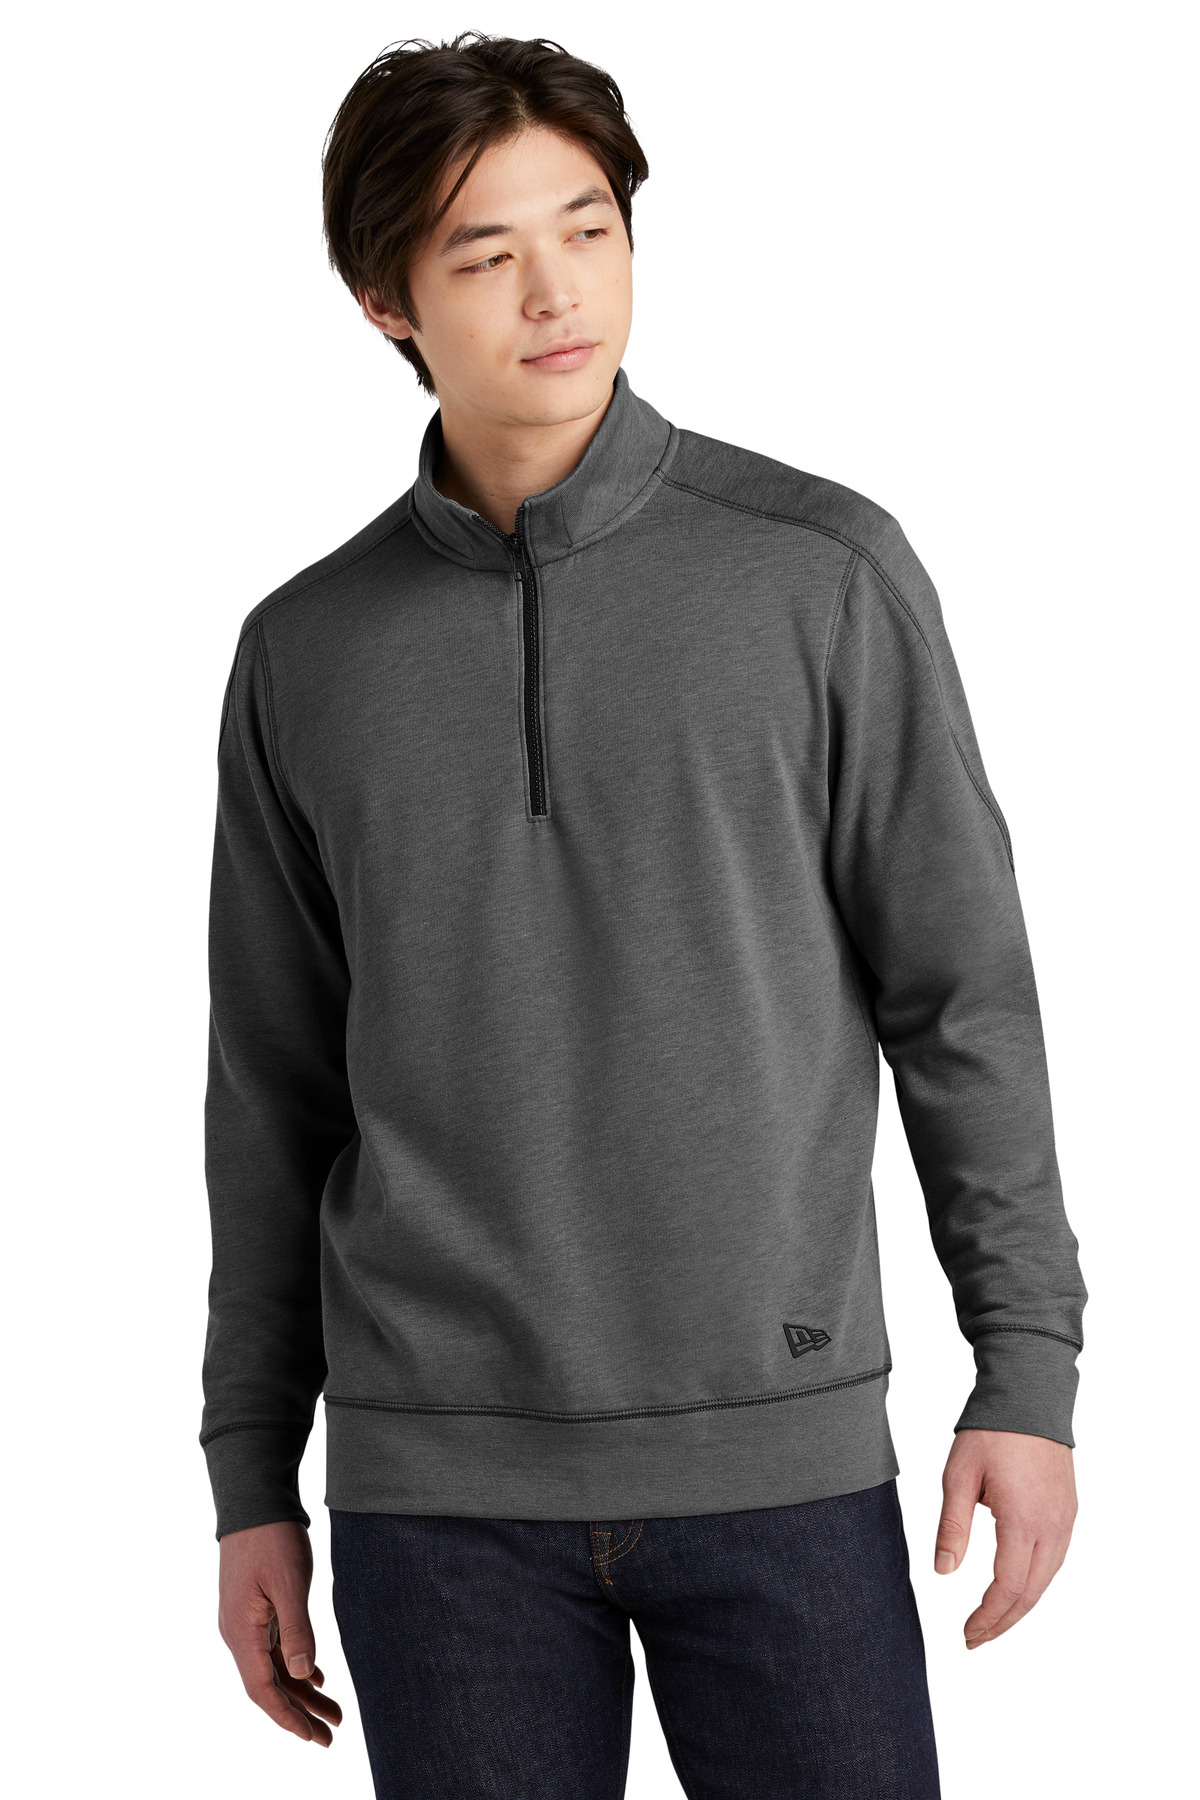 New Era Hospitality Sweatshirts & Fleece ® Tri-Blend Fleece 1/4-Zip Pullover.-New Era